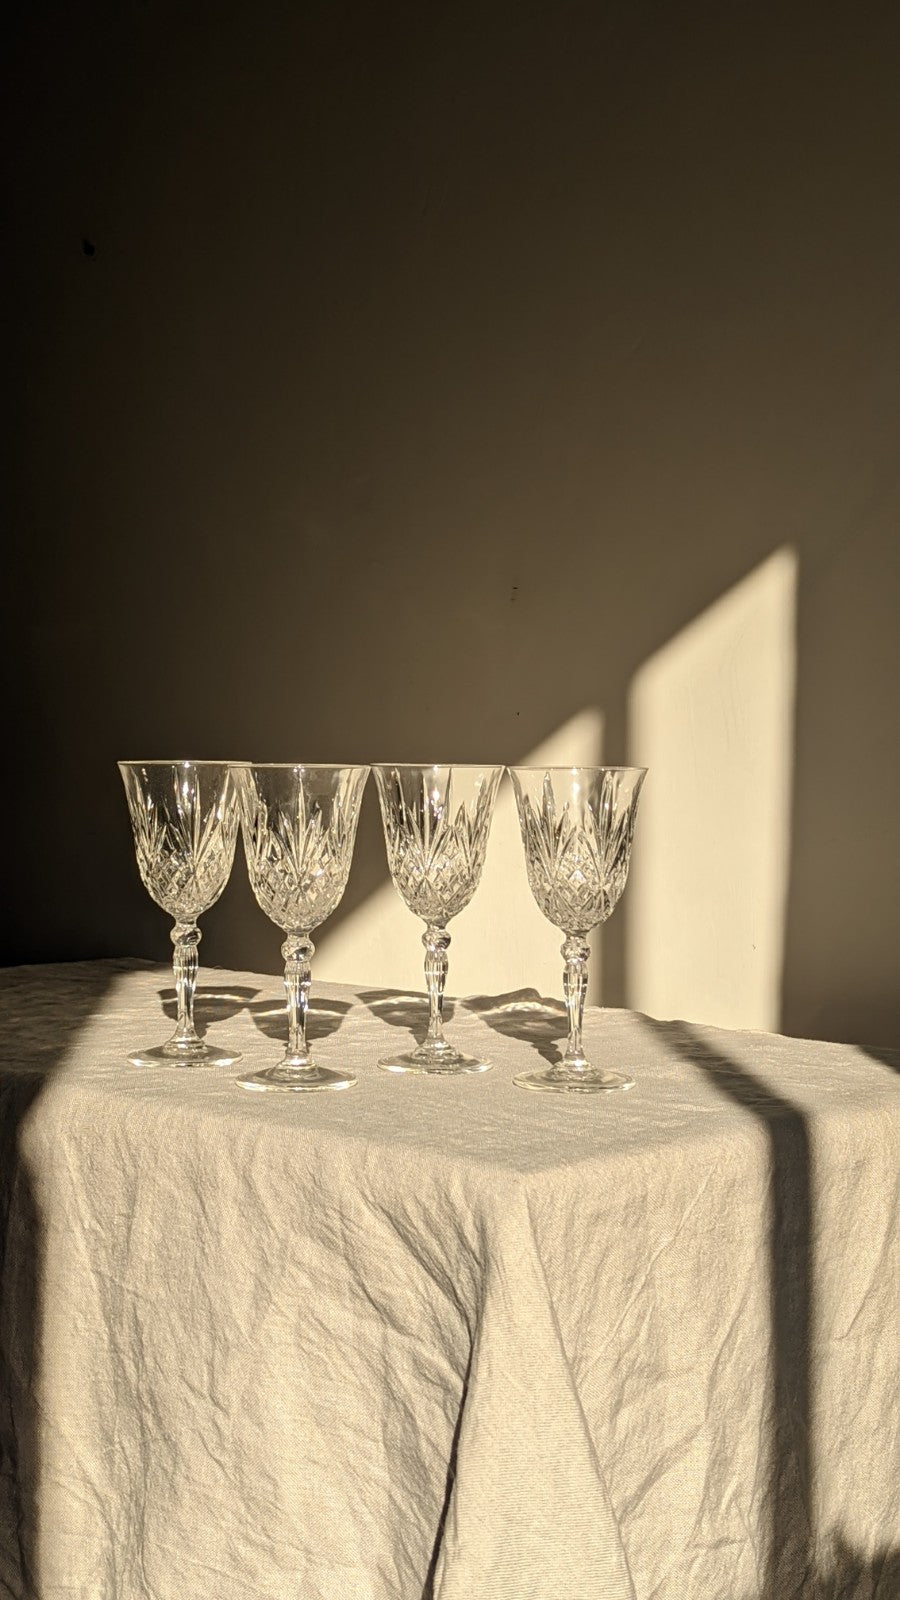 Set of four crystal white wine glasses